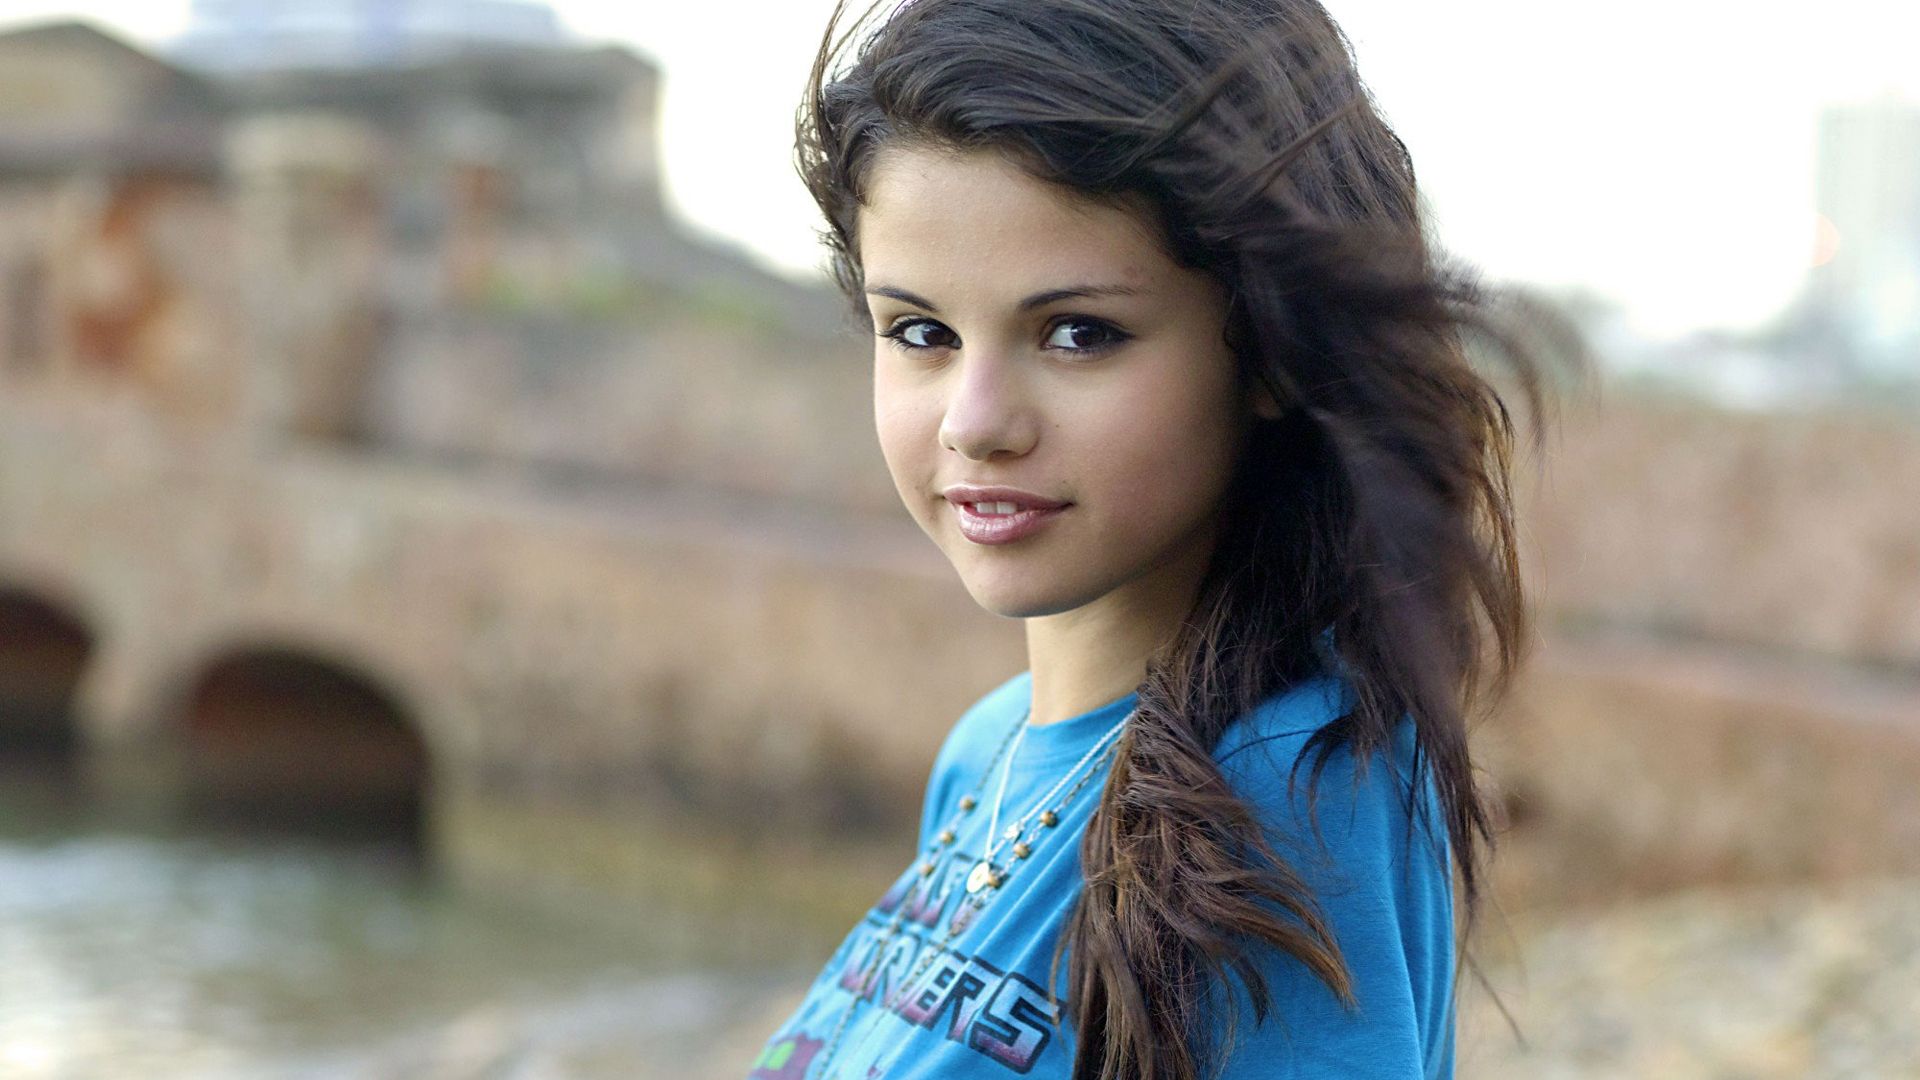 Selena Gomez Wallpaper HD Free Download | Hd New wallpapers